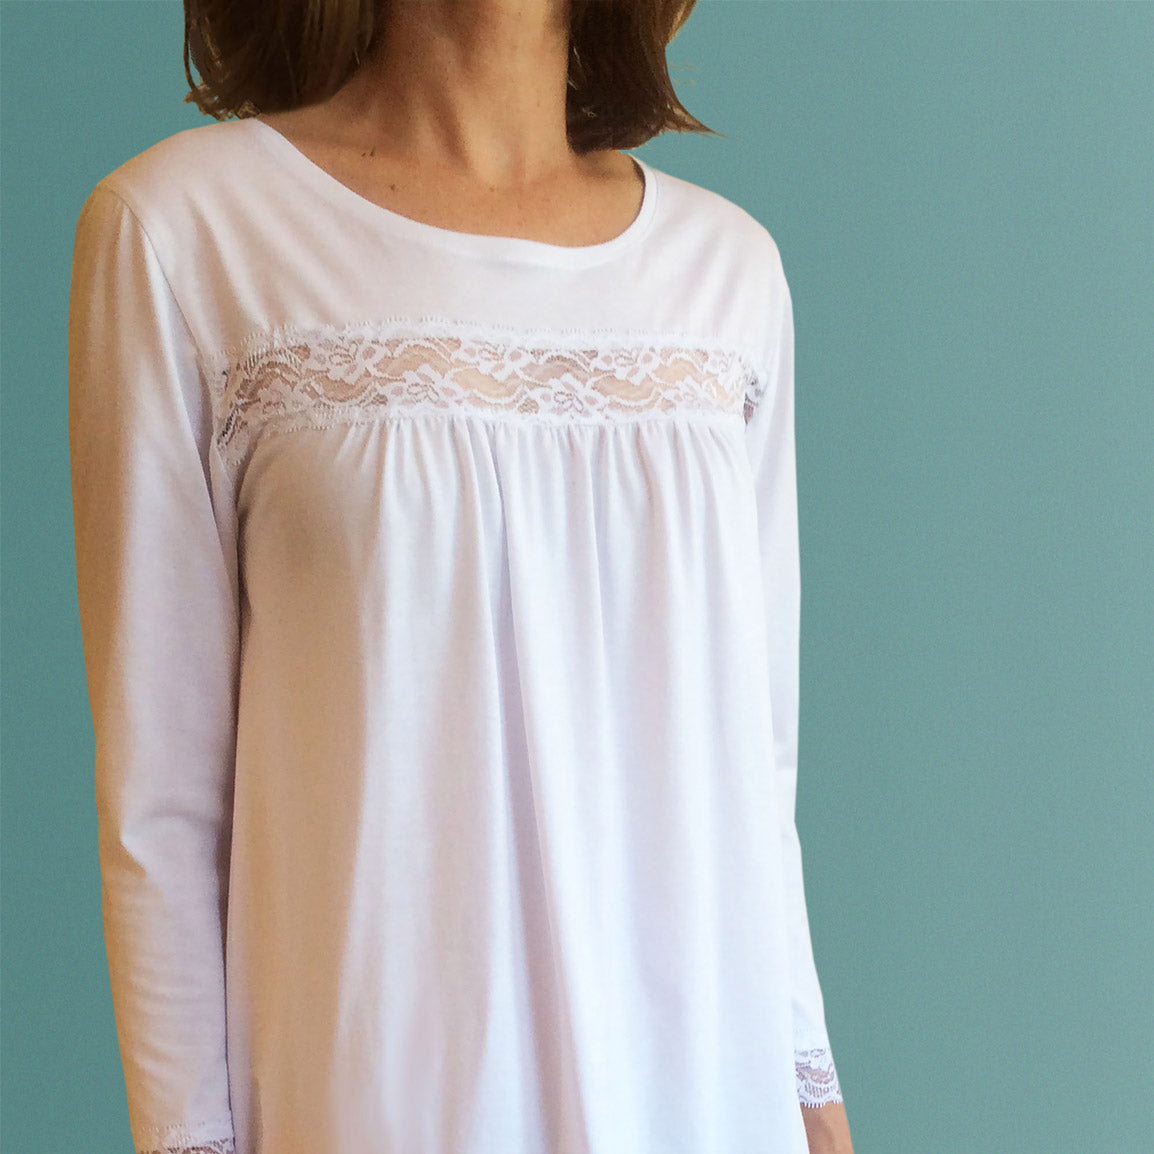 Womens nighties Australia. Organic cotton and lace nightgown made in Australia.